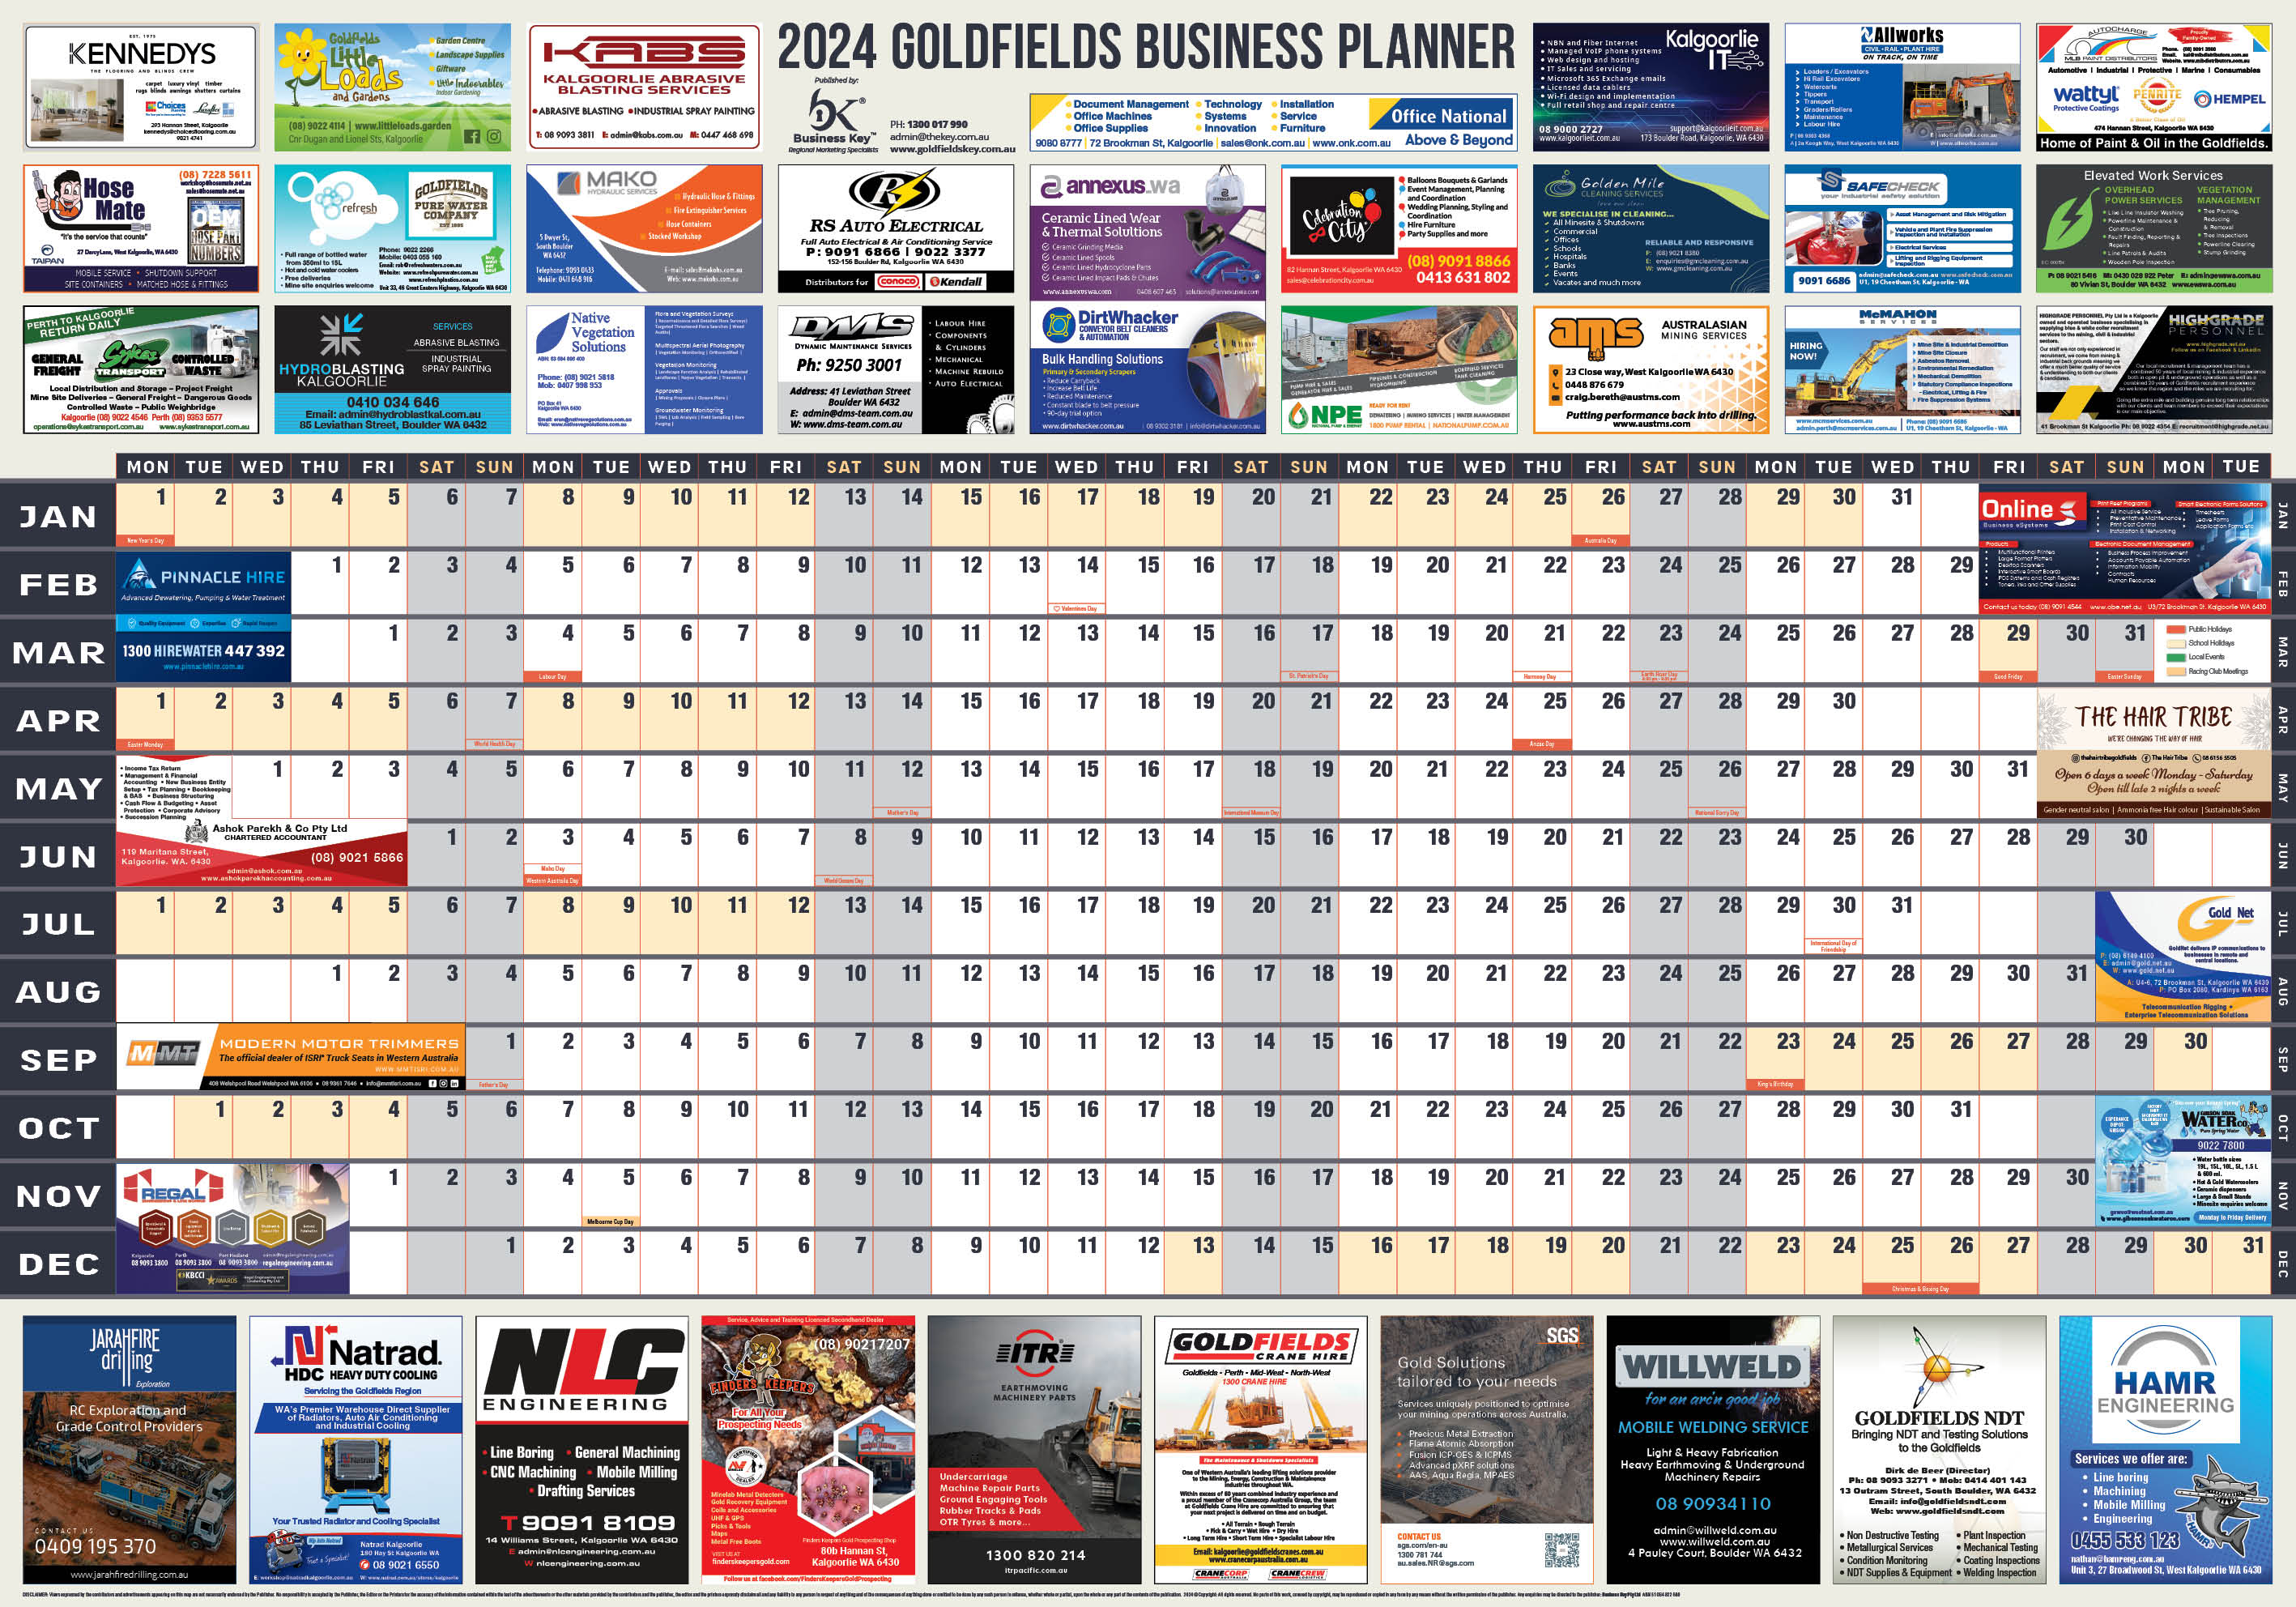 Goldfields Business Planner